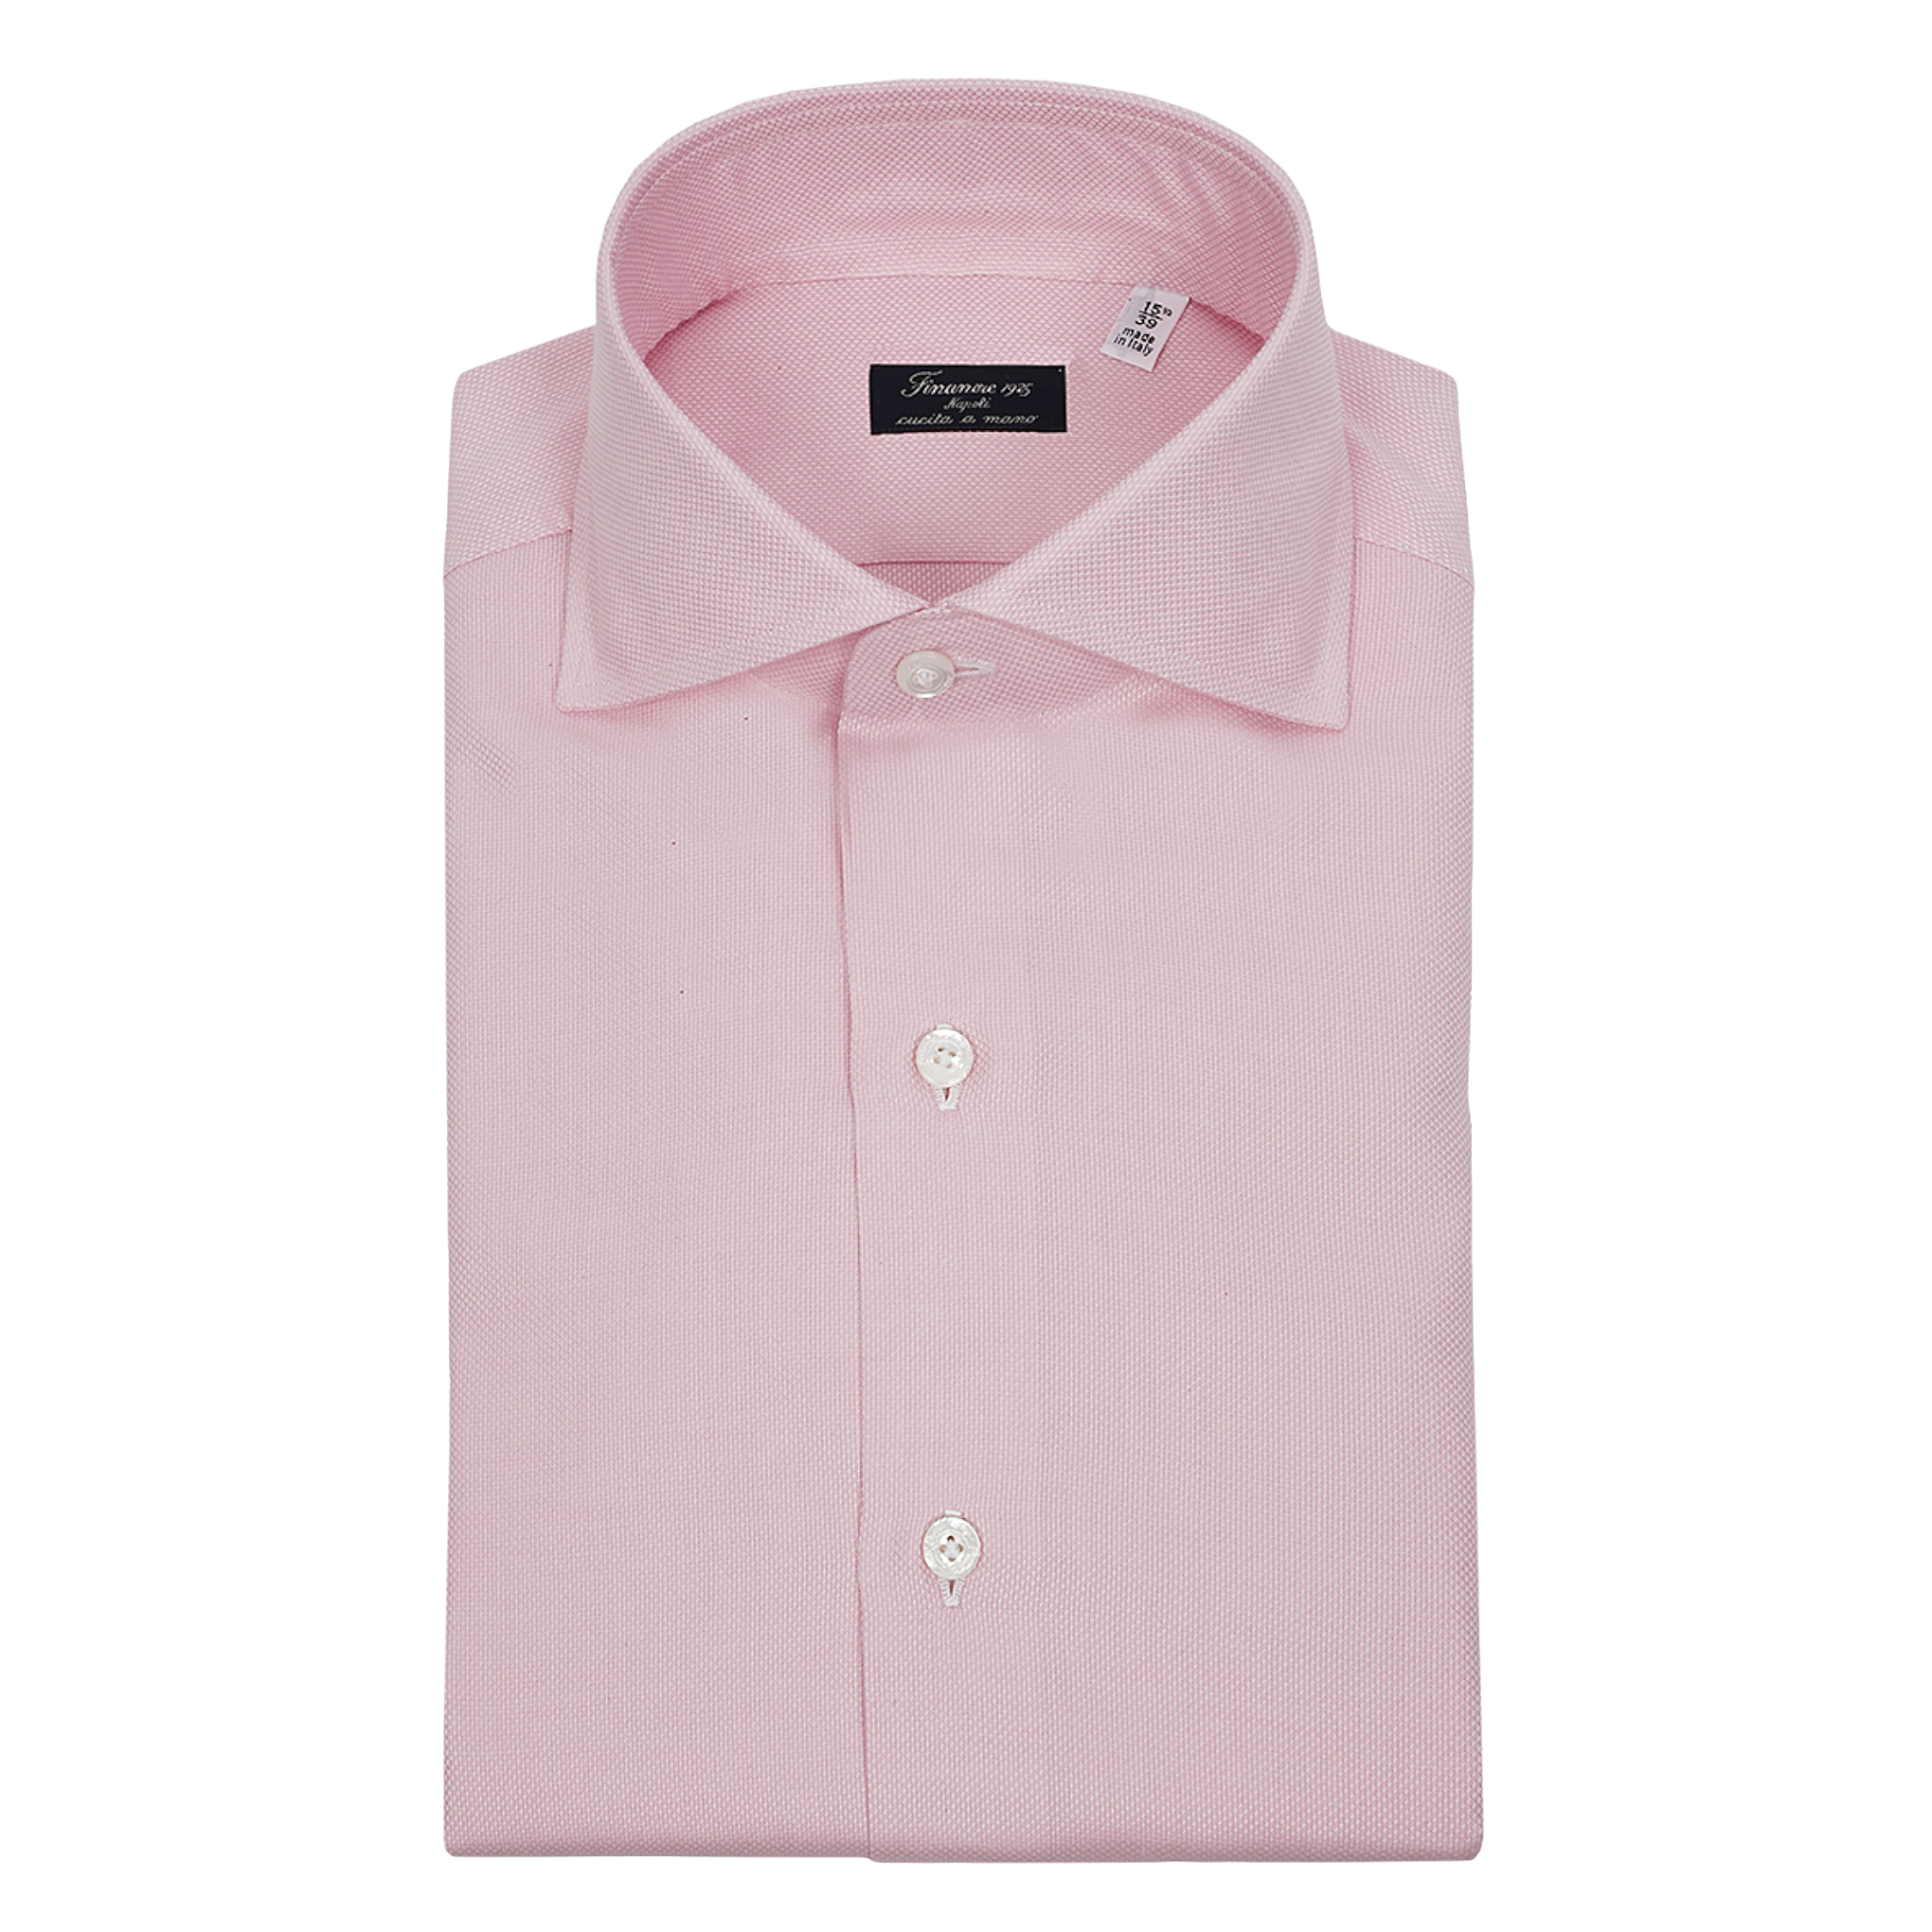 Napoli shirt dress regular pink cotton micropattern Finamore 1925